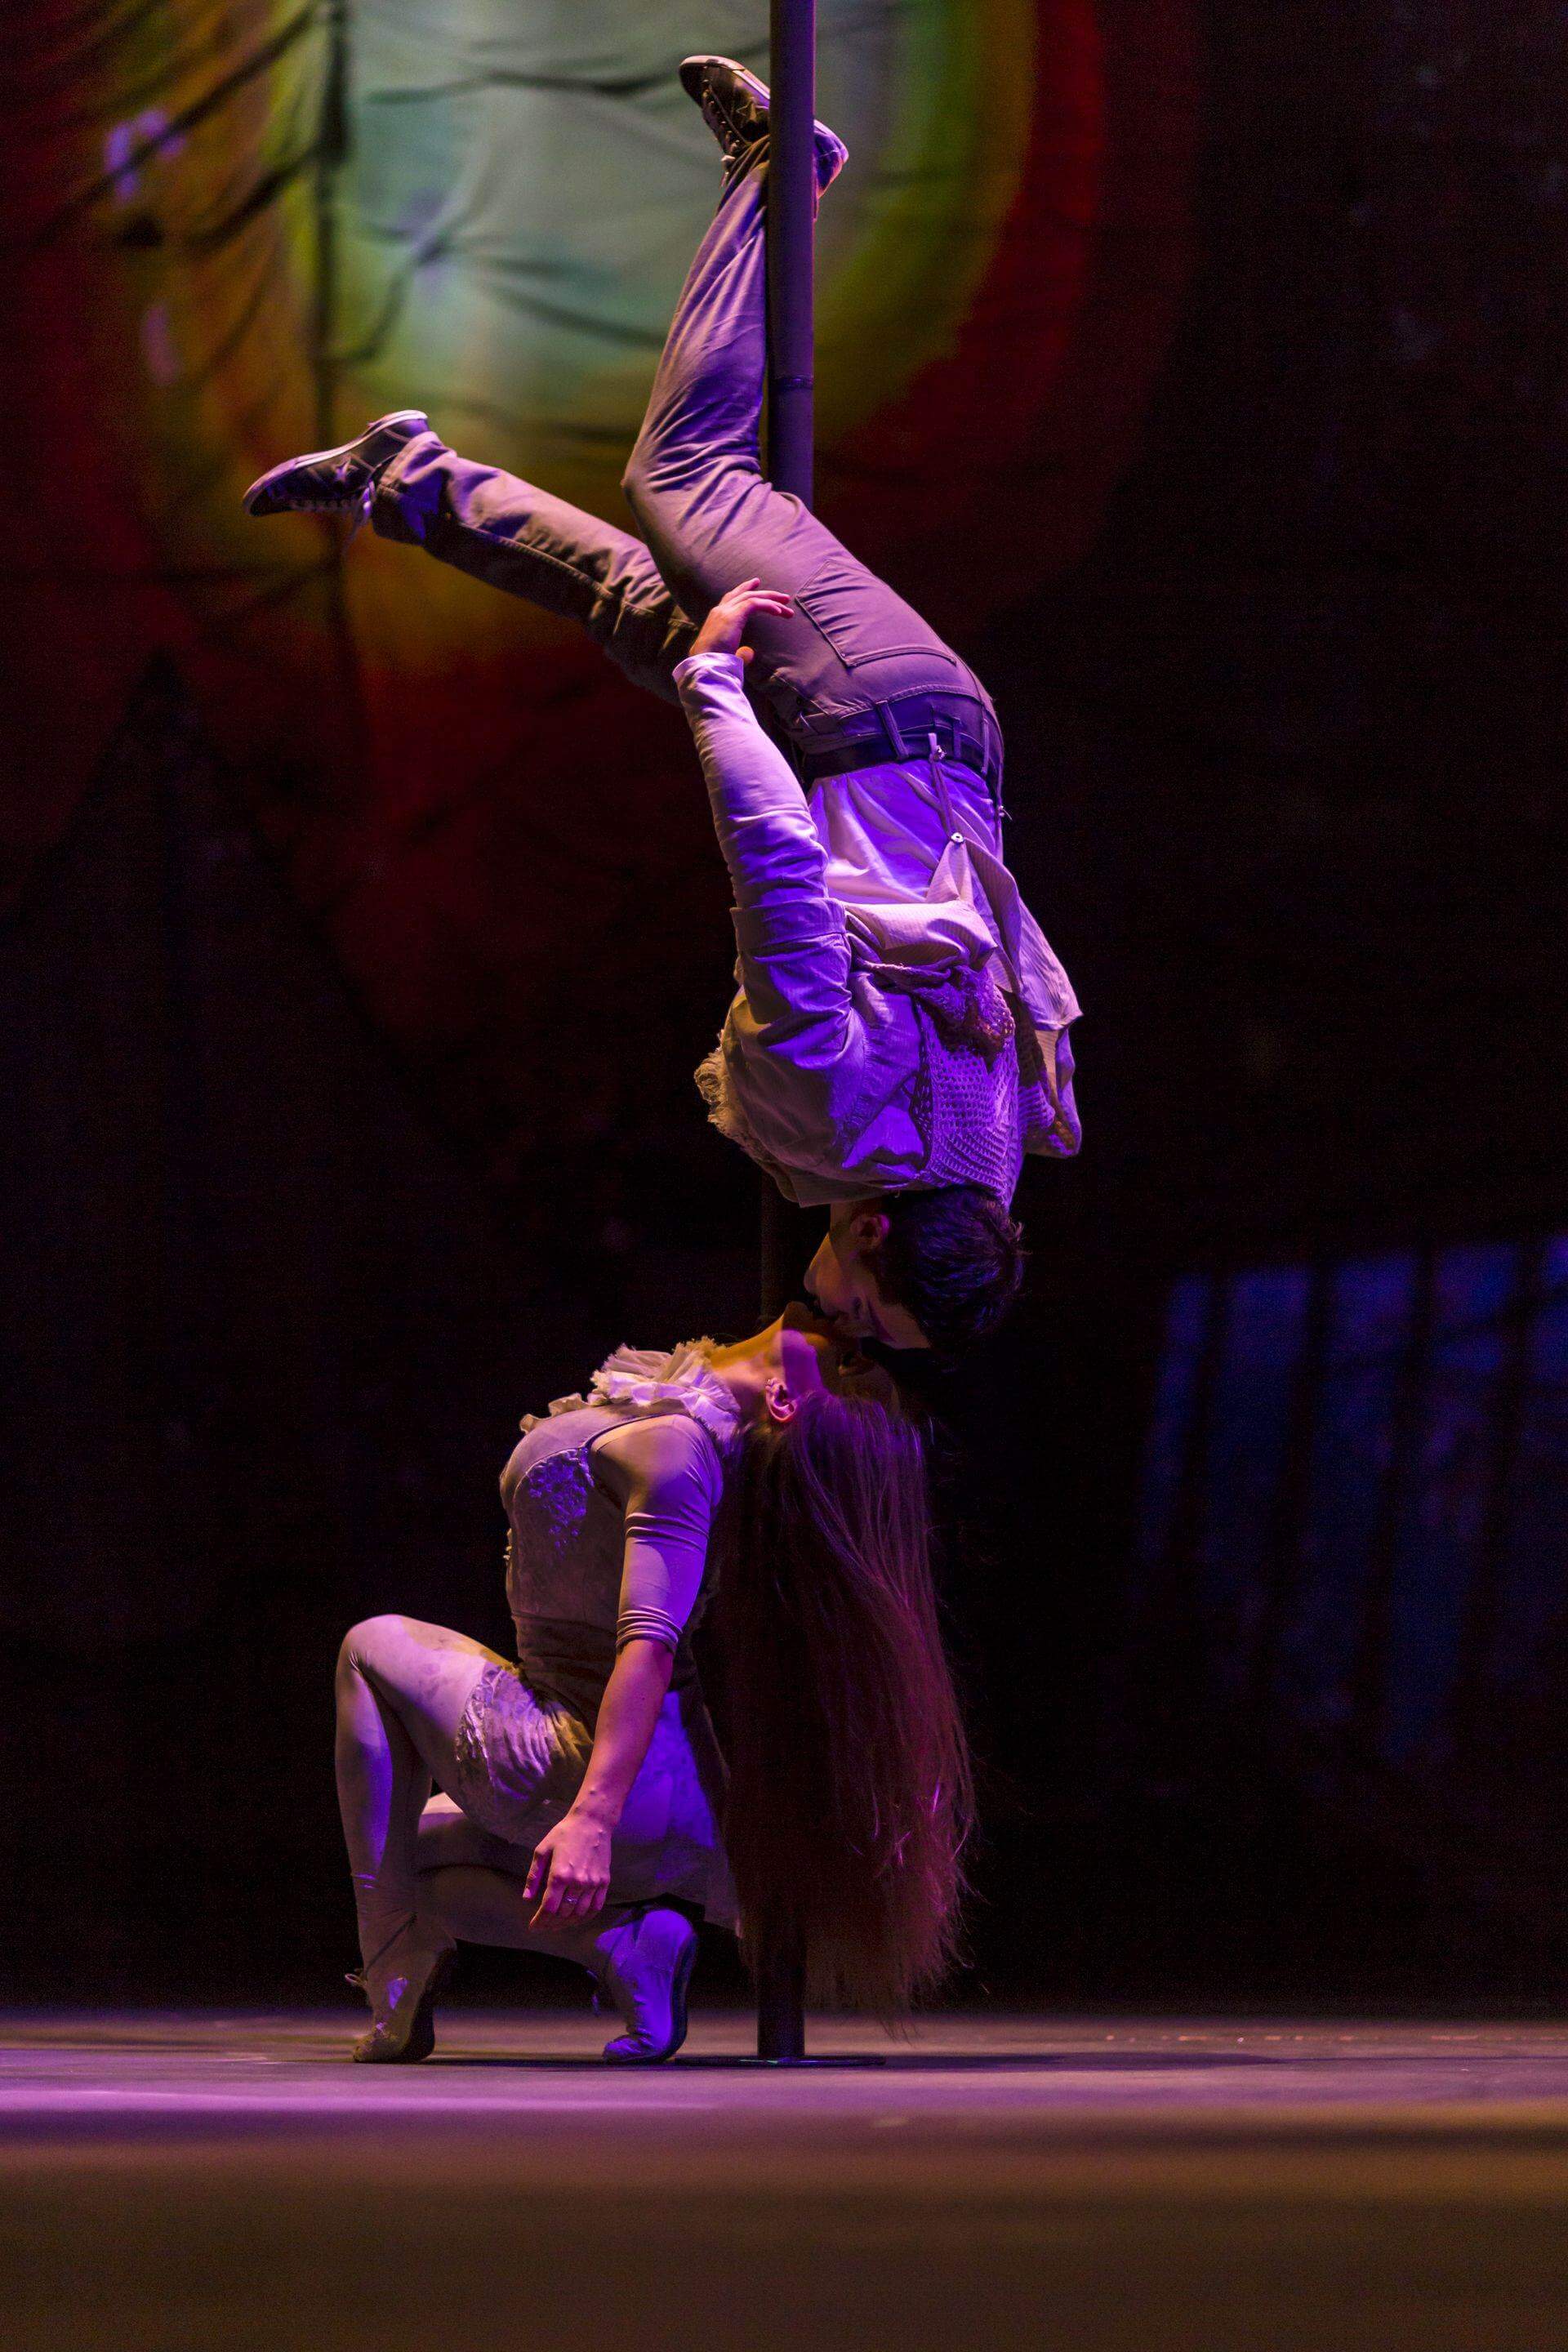 Scalada by Cirque du Soleil 2013: Dansa vertical en parella